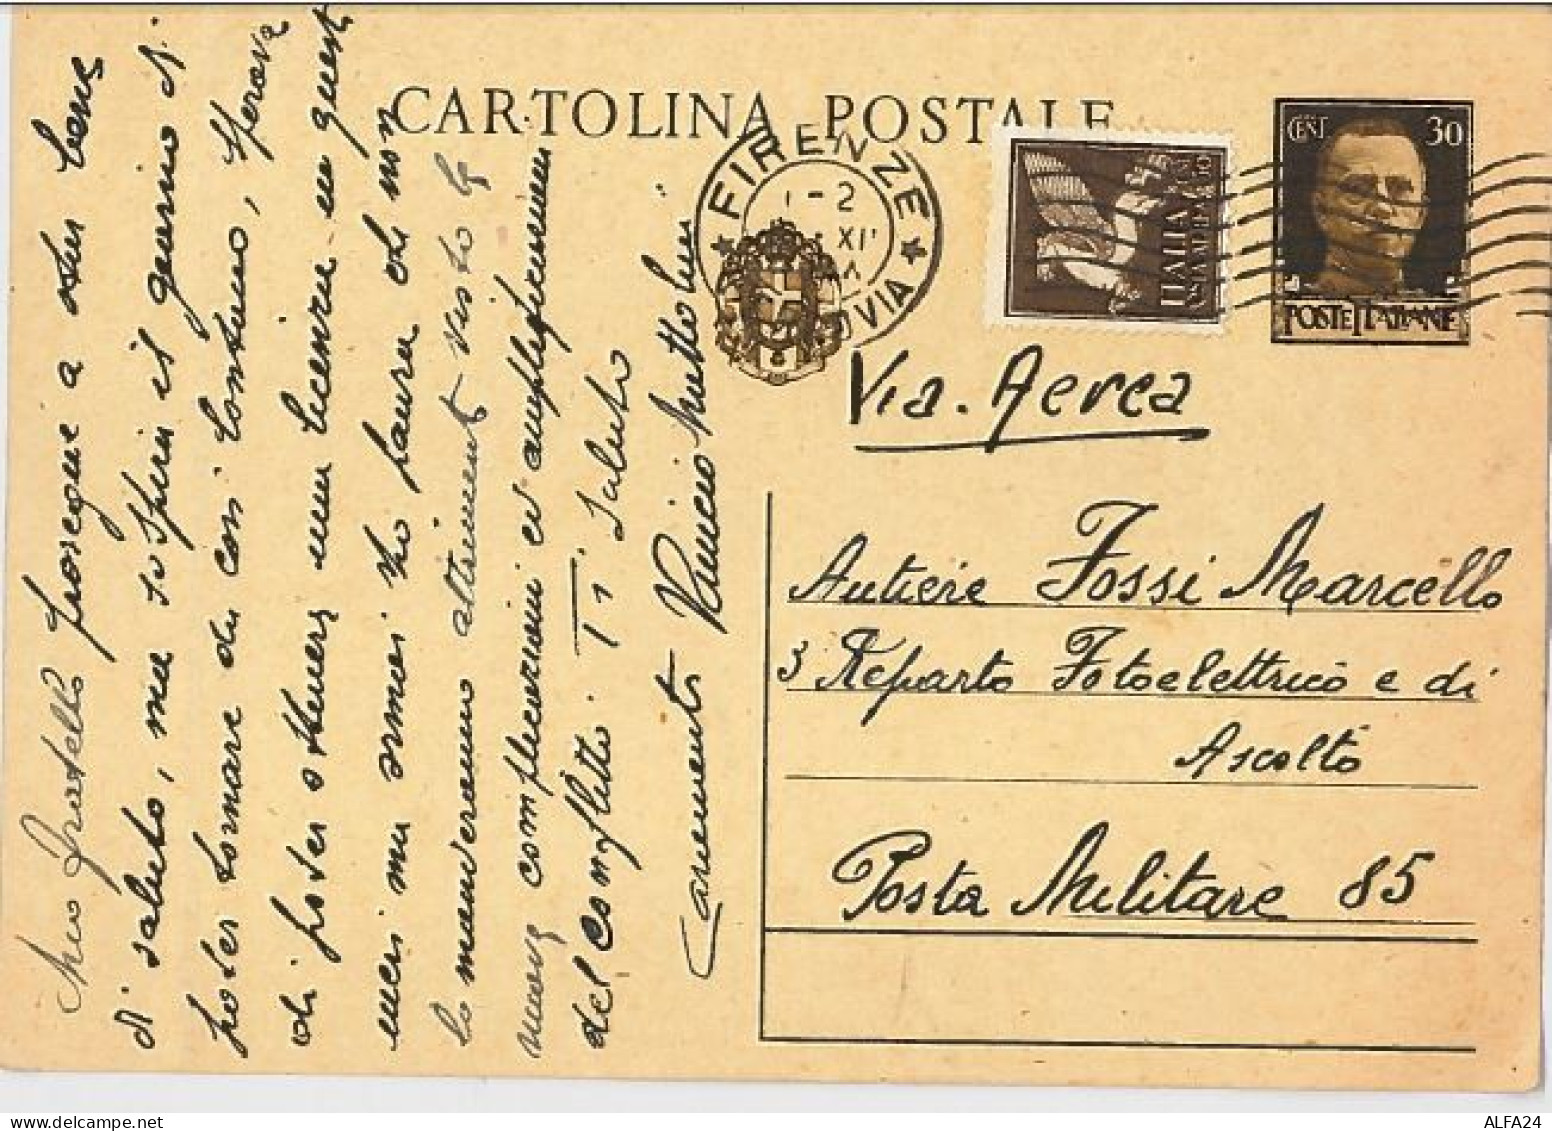 CARTOLINA INTERO POSALE VIAGGIATO POSTA AEREA 1941  (SX57 - Storia Postale (Posta Aerea)